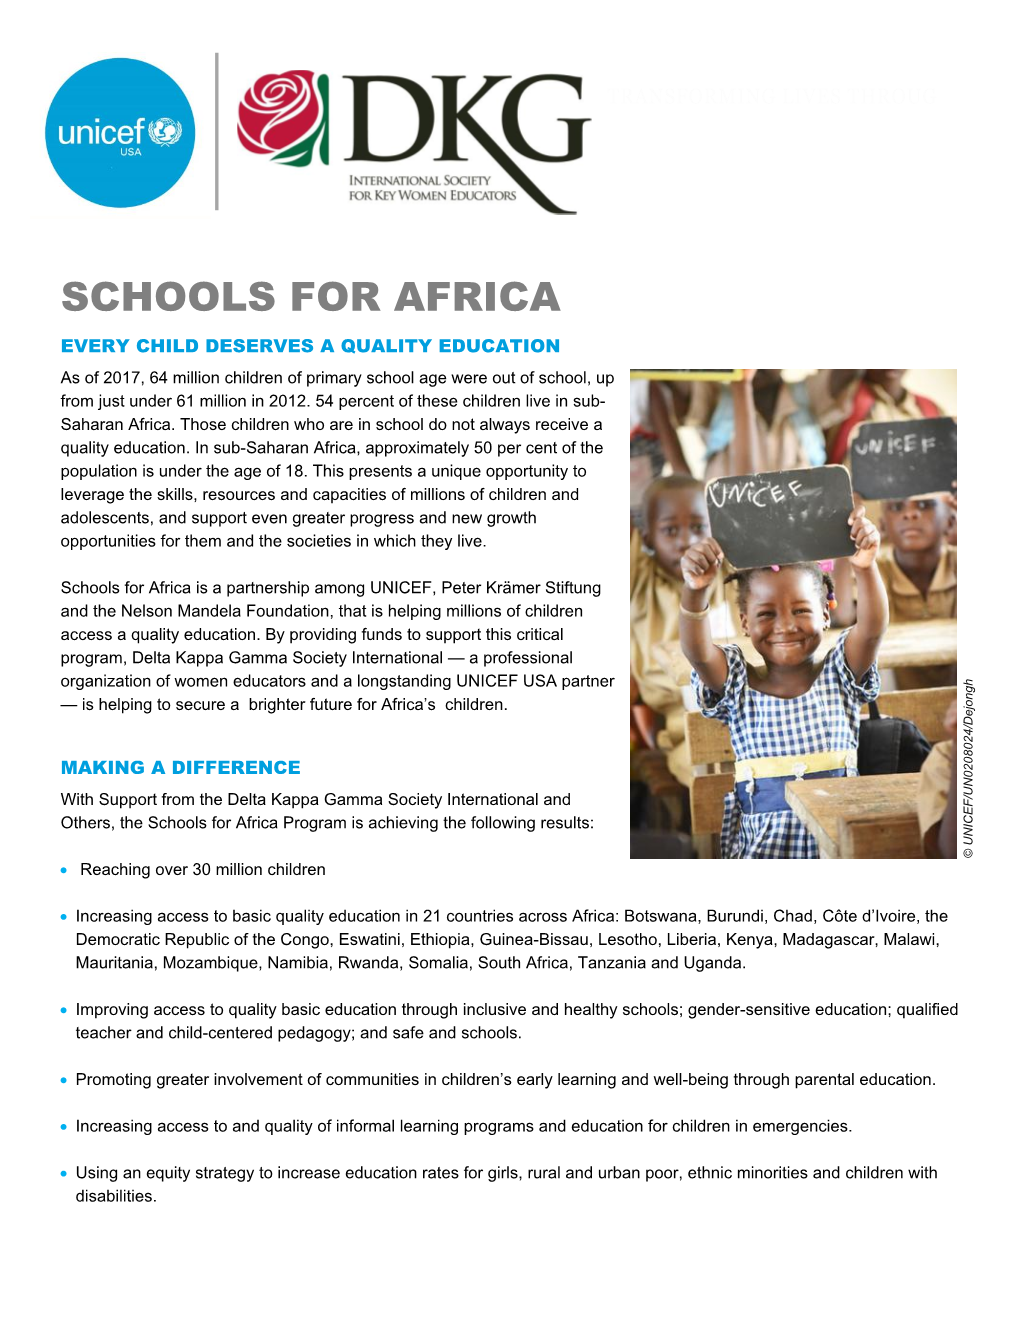 Schools for Africa